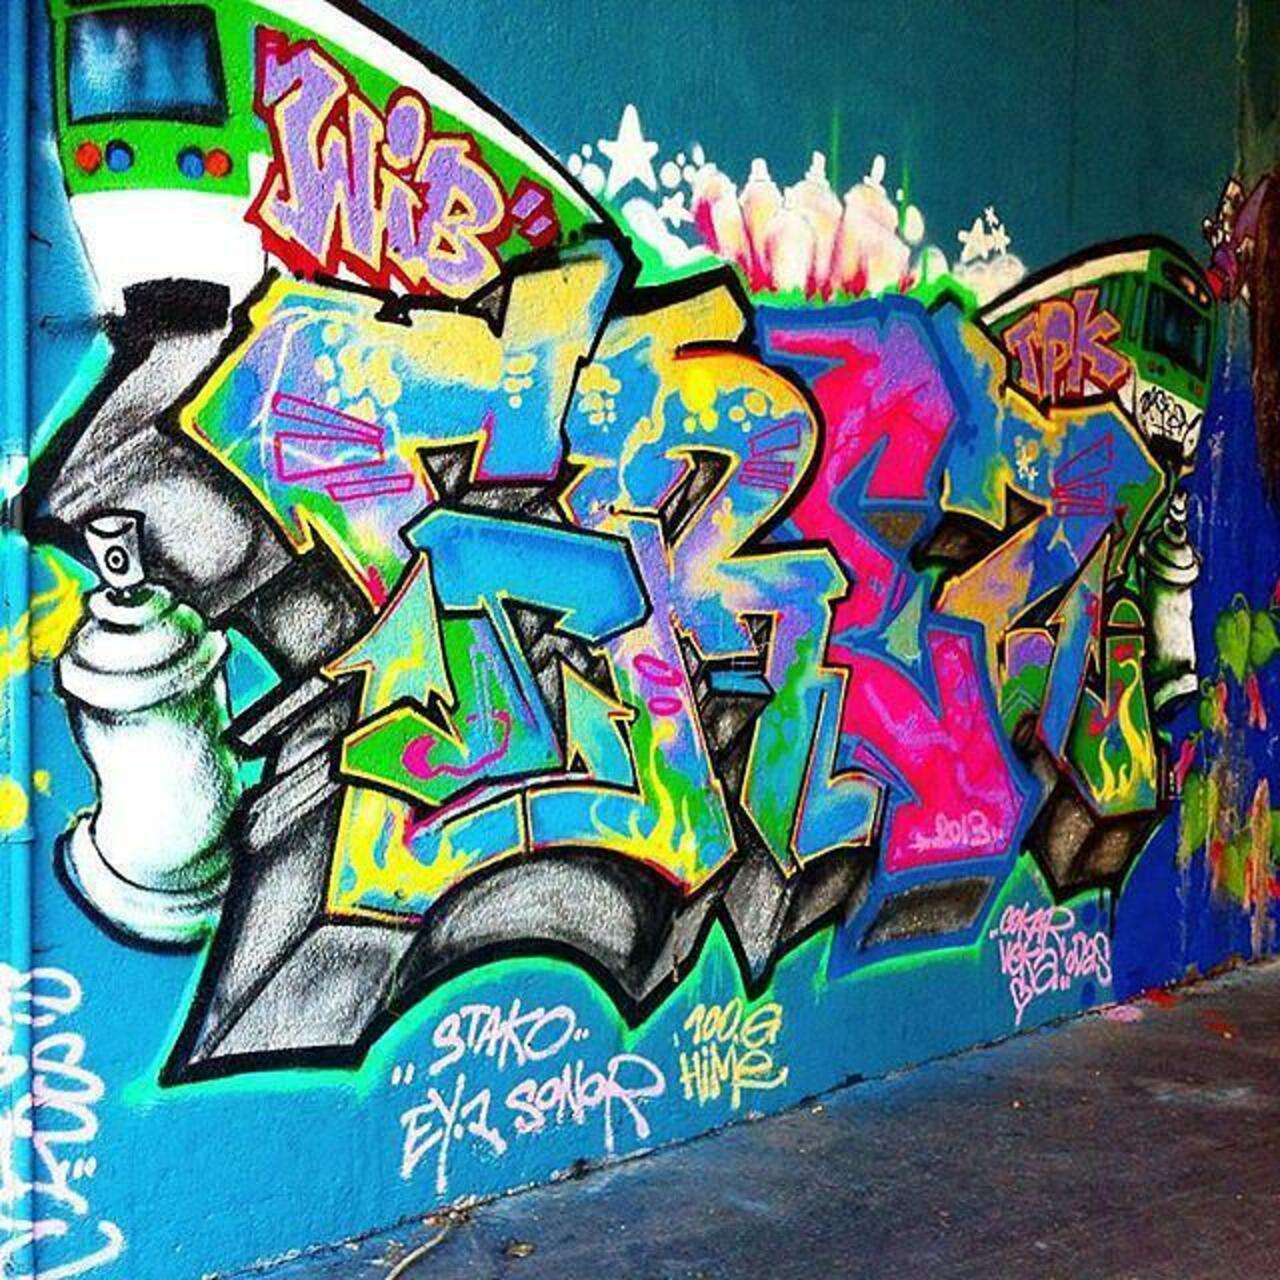 #streetart #streetarteverywhere #streetshot #graffitiart #graffiti #arturbain #urbanart  #mur #mural #wall #wallart… https://t.co/T9NgLR4eAW